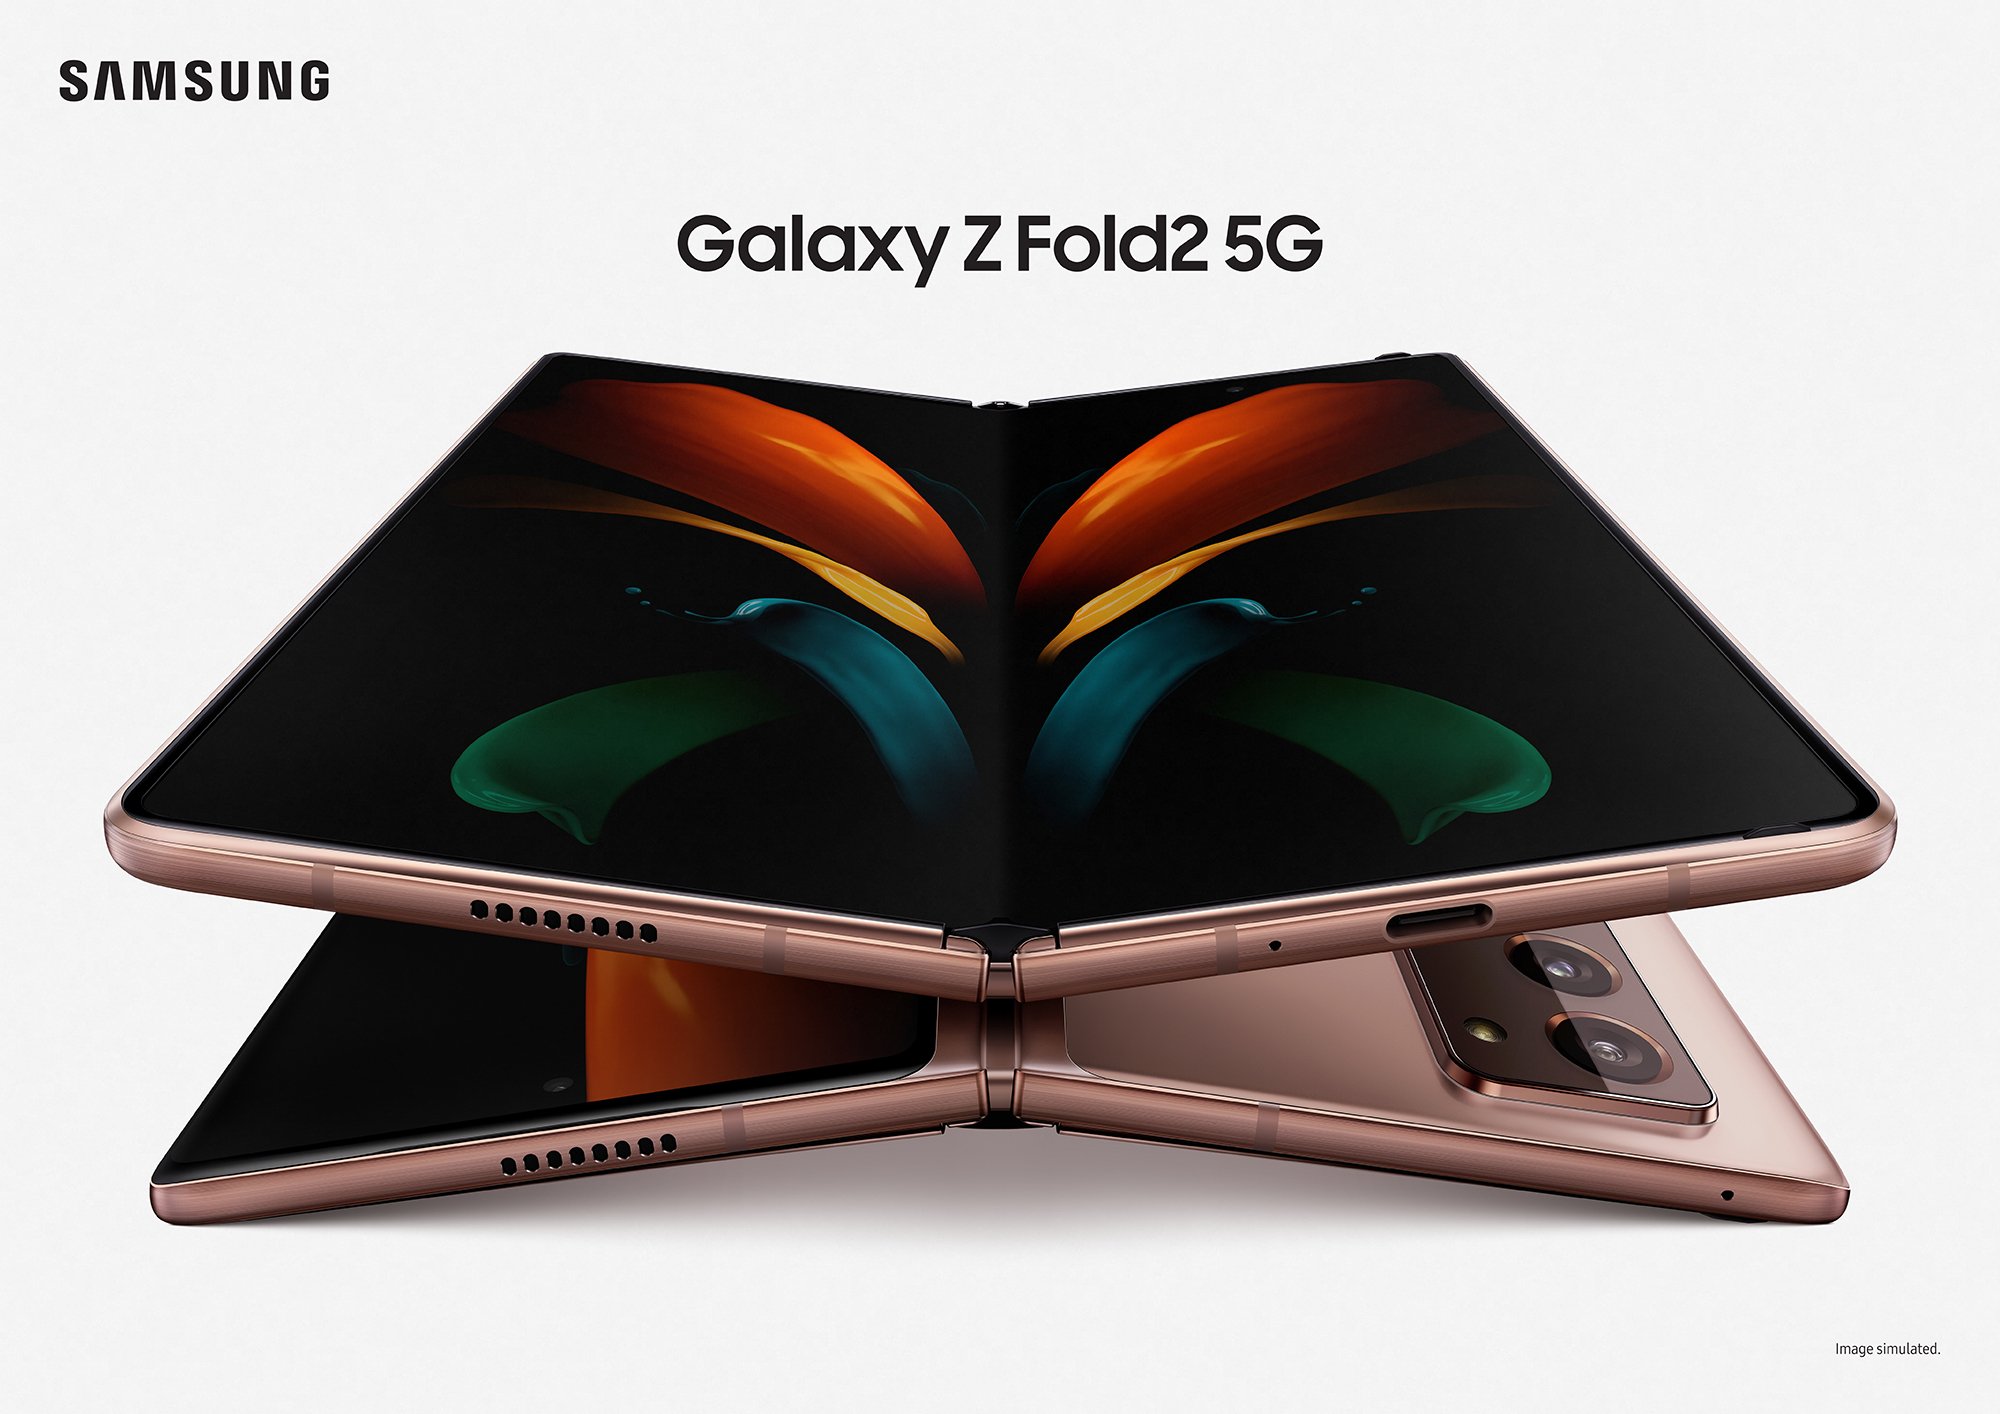 Samsung Galaxy Z Fold 2 has surface hardness similar to Galaxy Z Flip